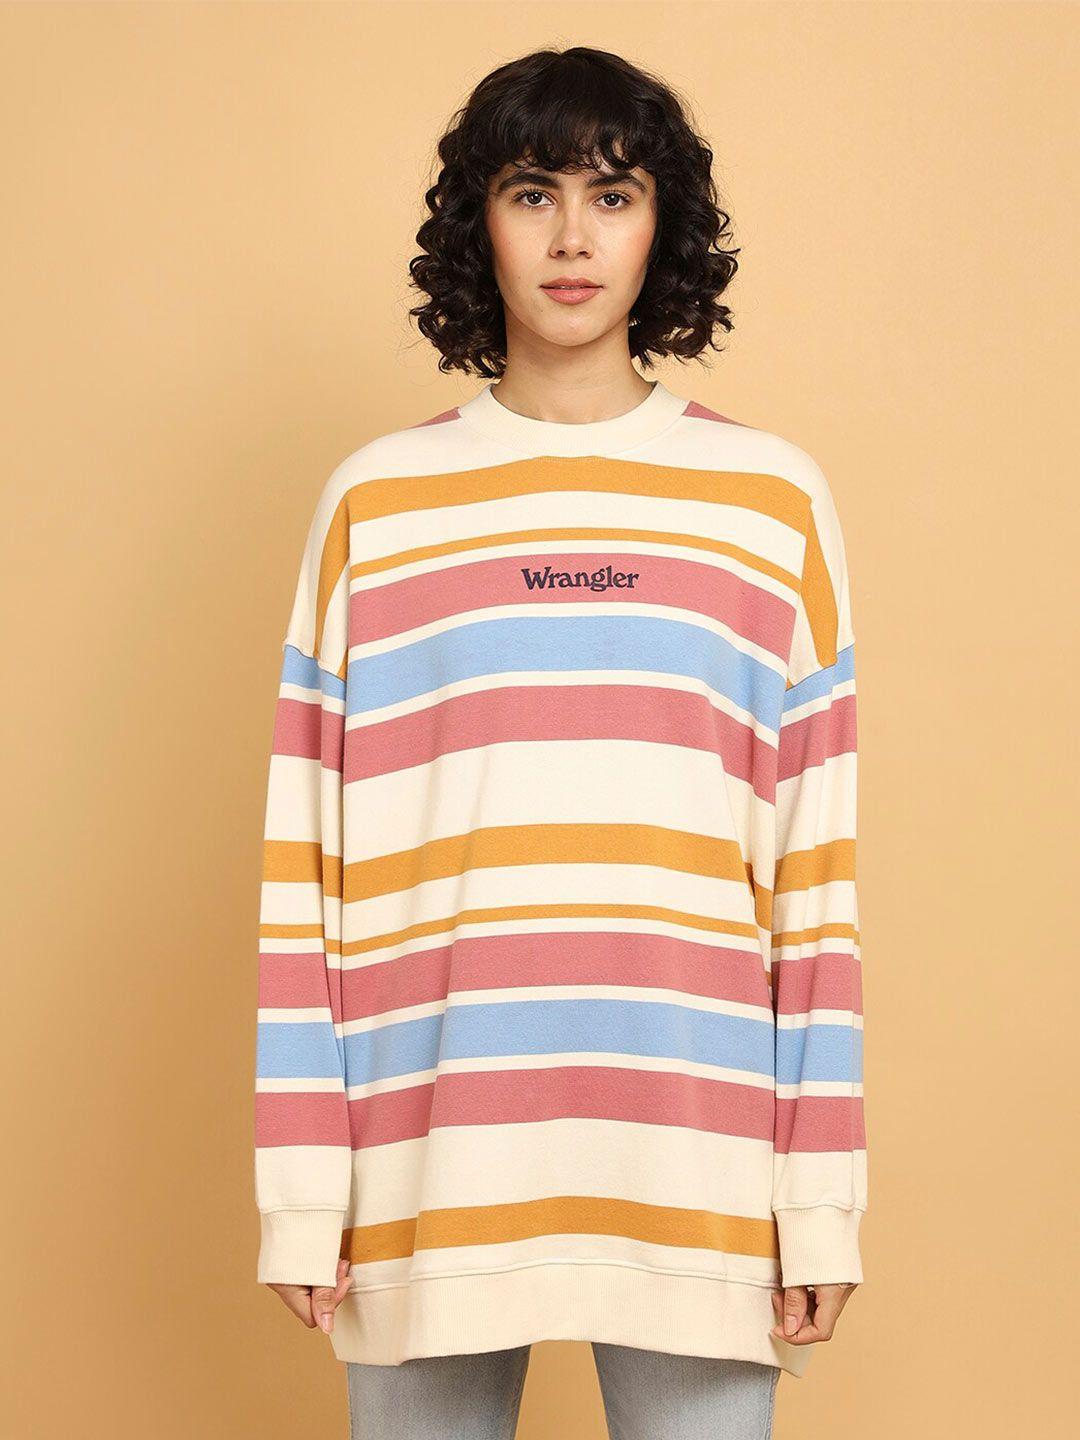 wrangler striped cotton sweatshirt